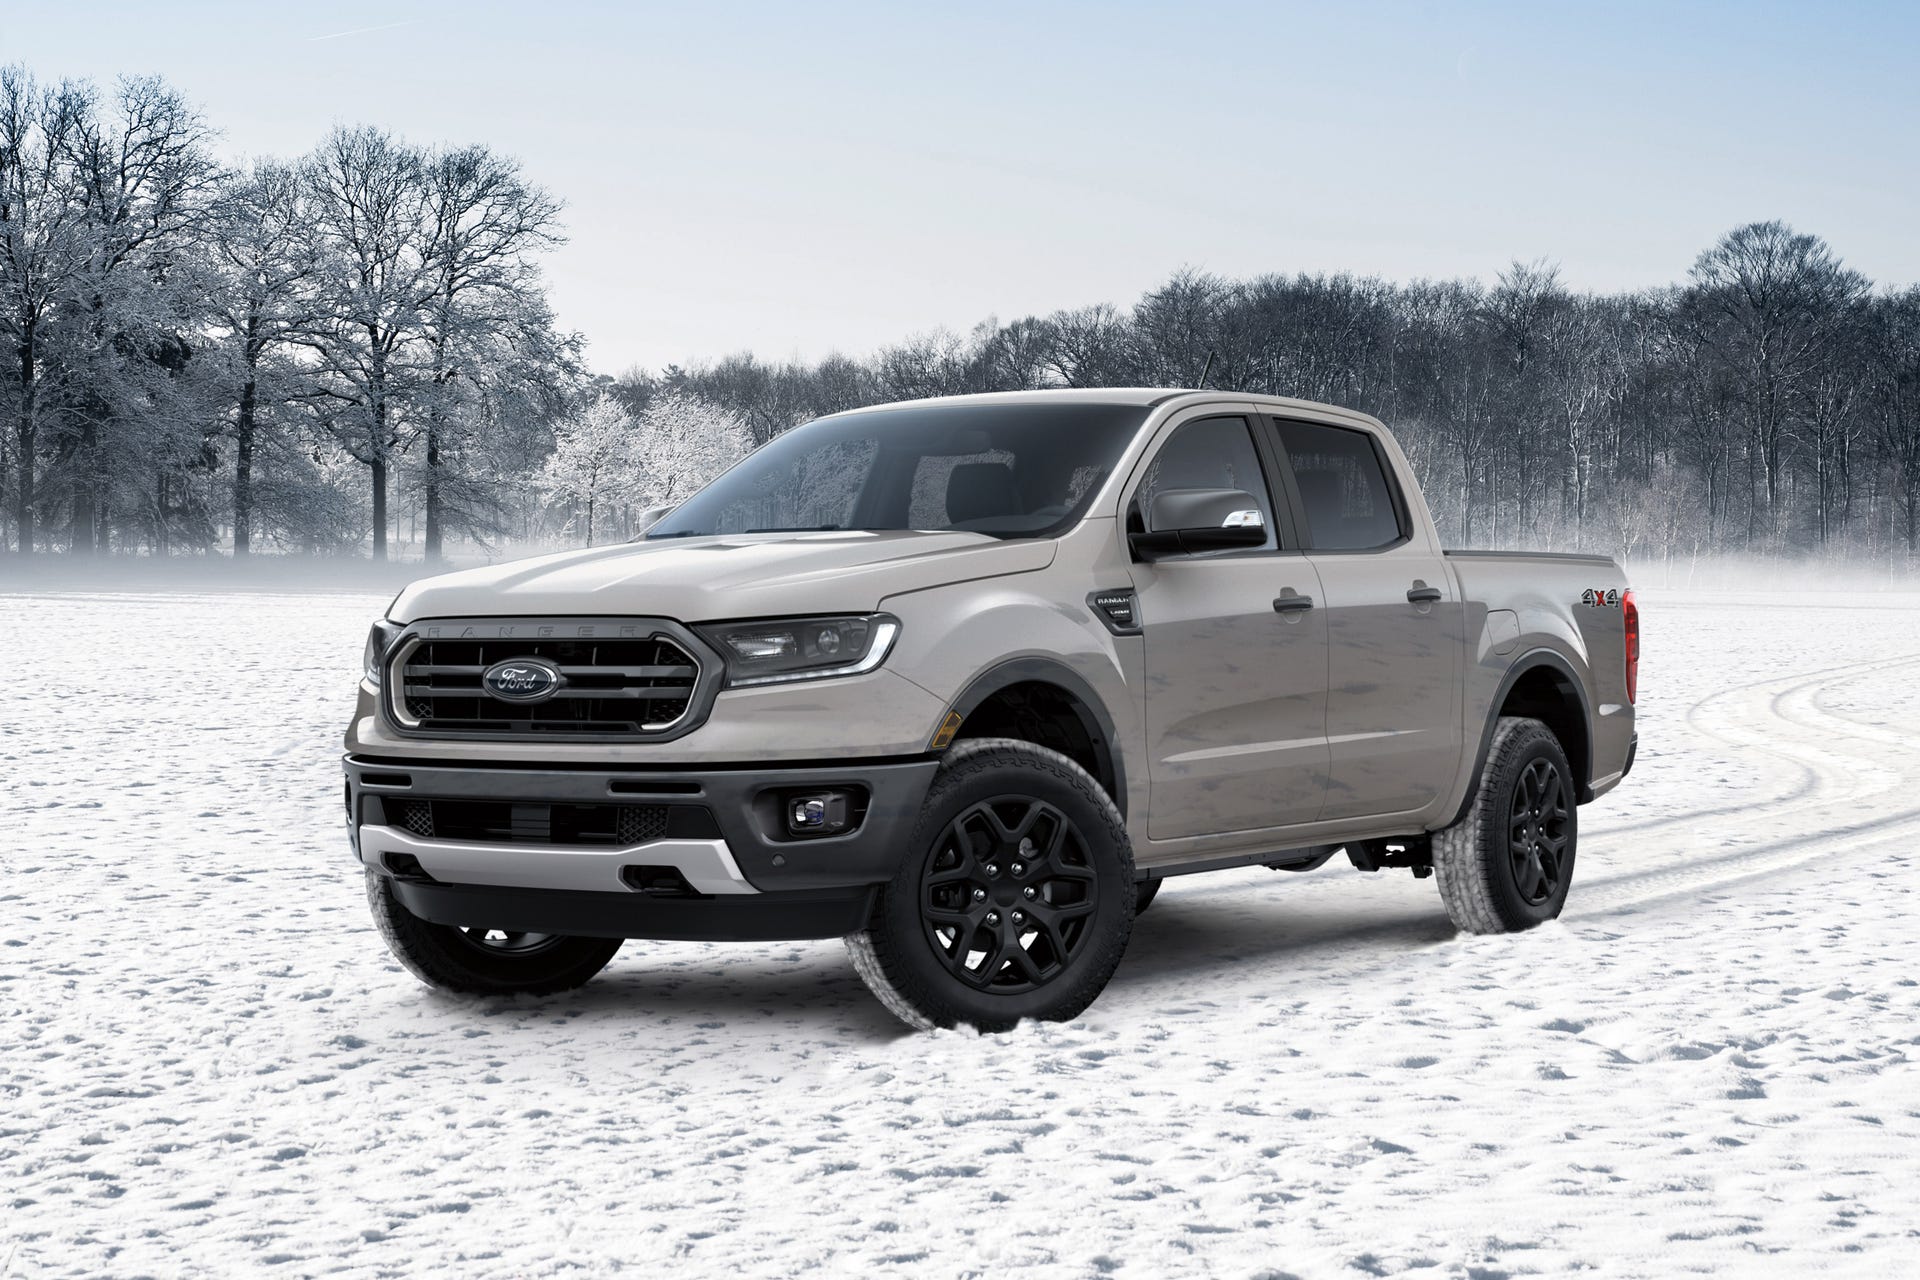 2022 Ford Ranger Splash - Snow Edition